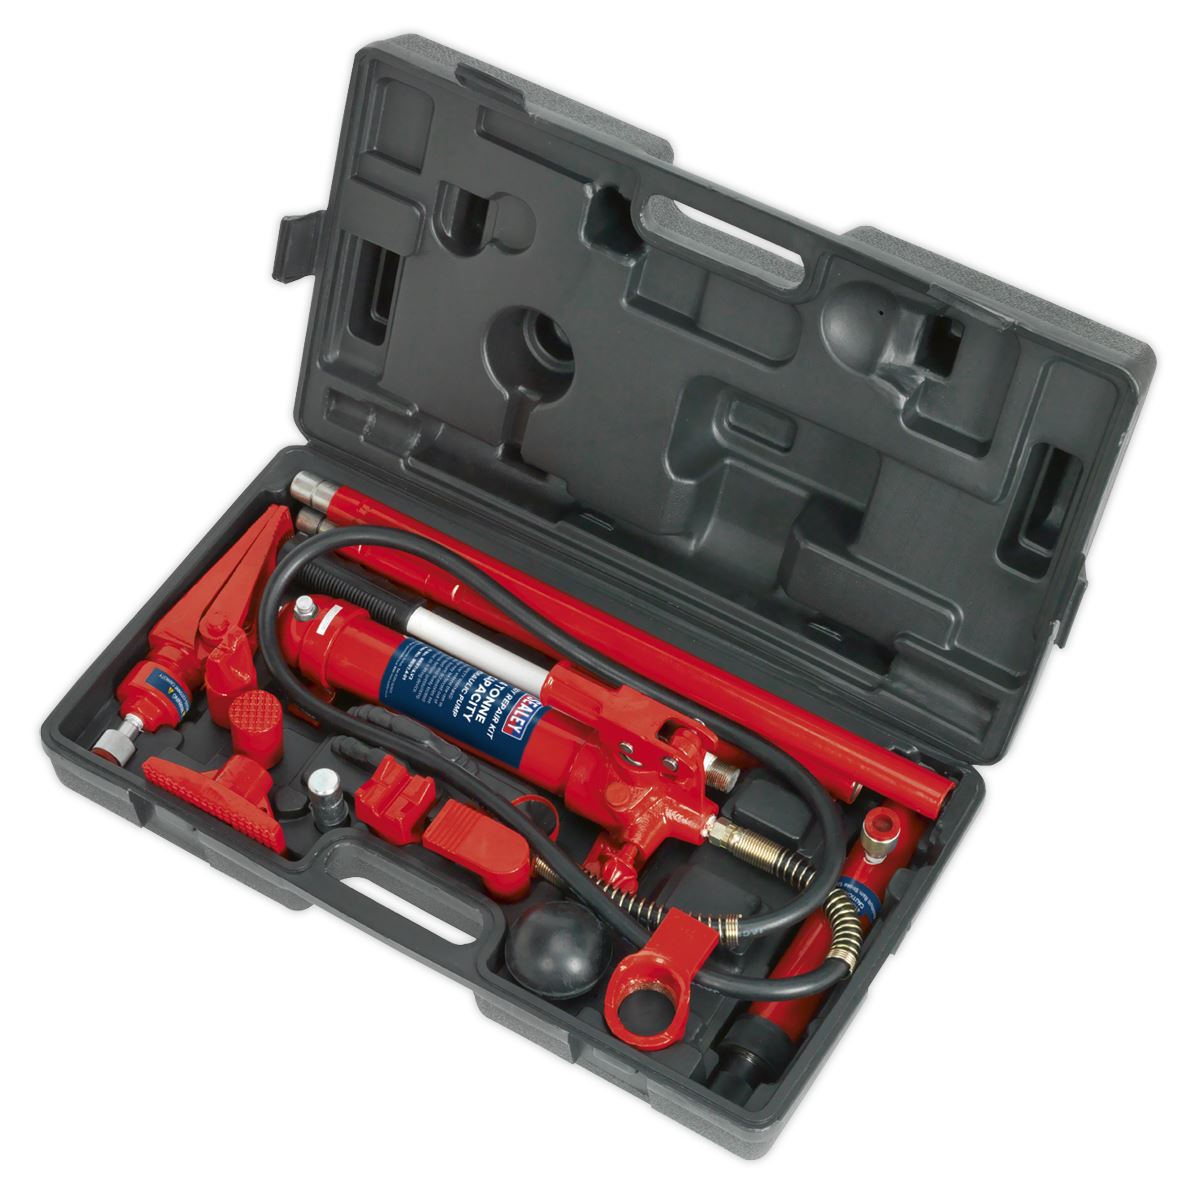 Sealey Hydraulic Body Repair Kit 4 Tonne Snap Type